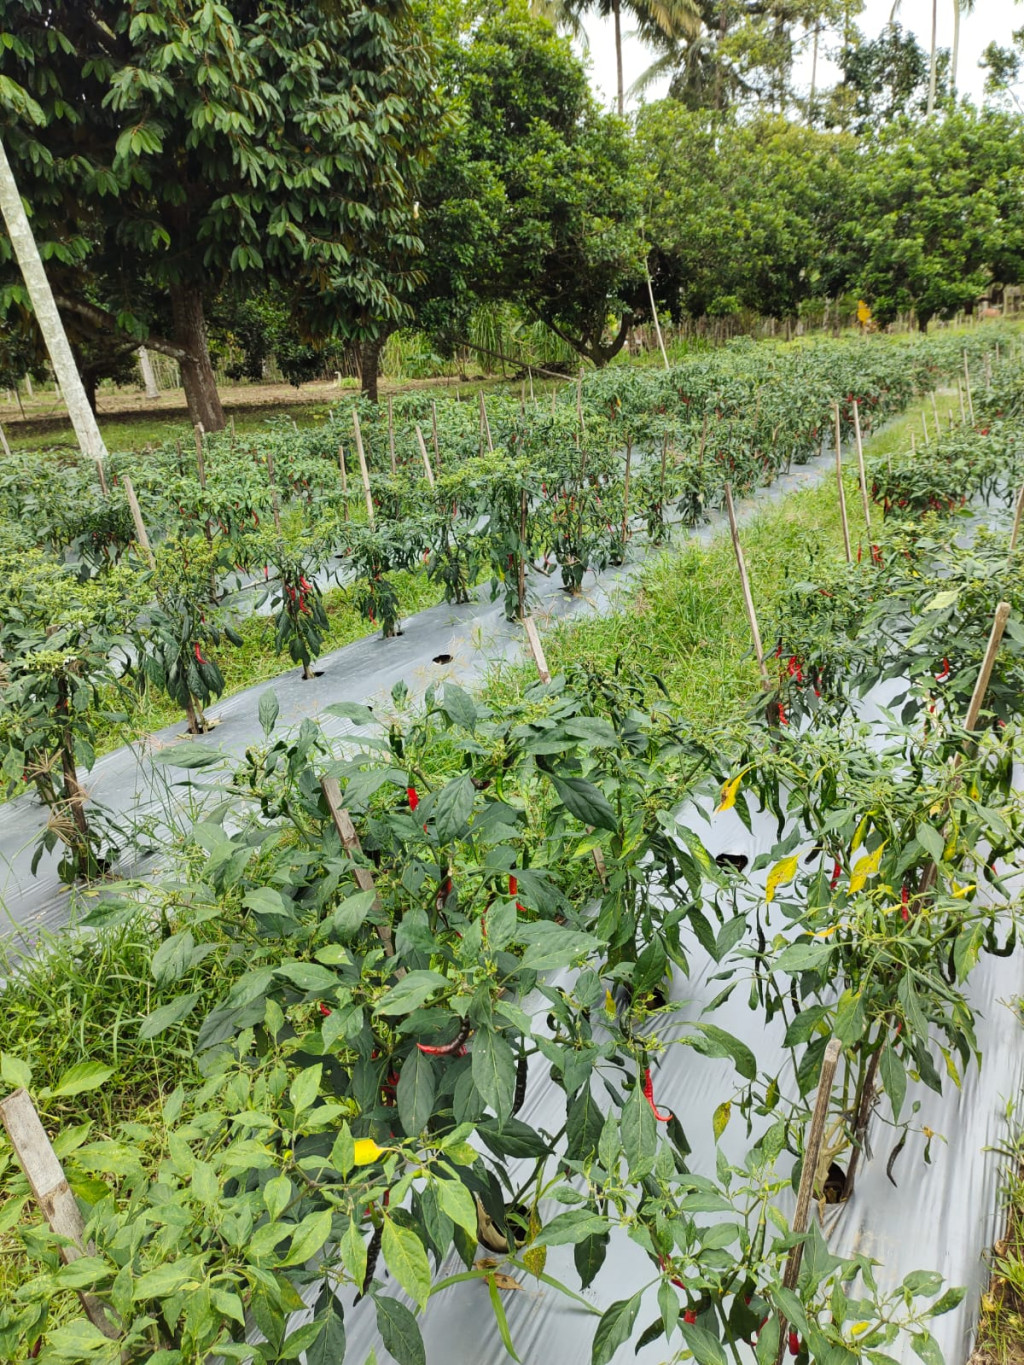 Kebun Cabe Yang Terdapat di Desa Peurade Sebagai Upaya Untuk Meningkatkan Ekonomi Masyarakat 